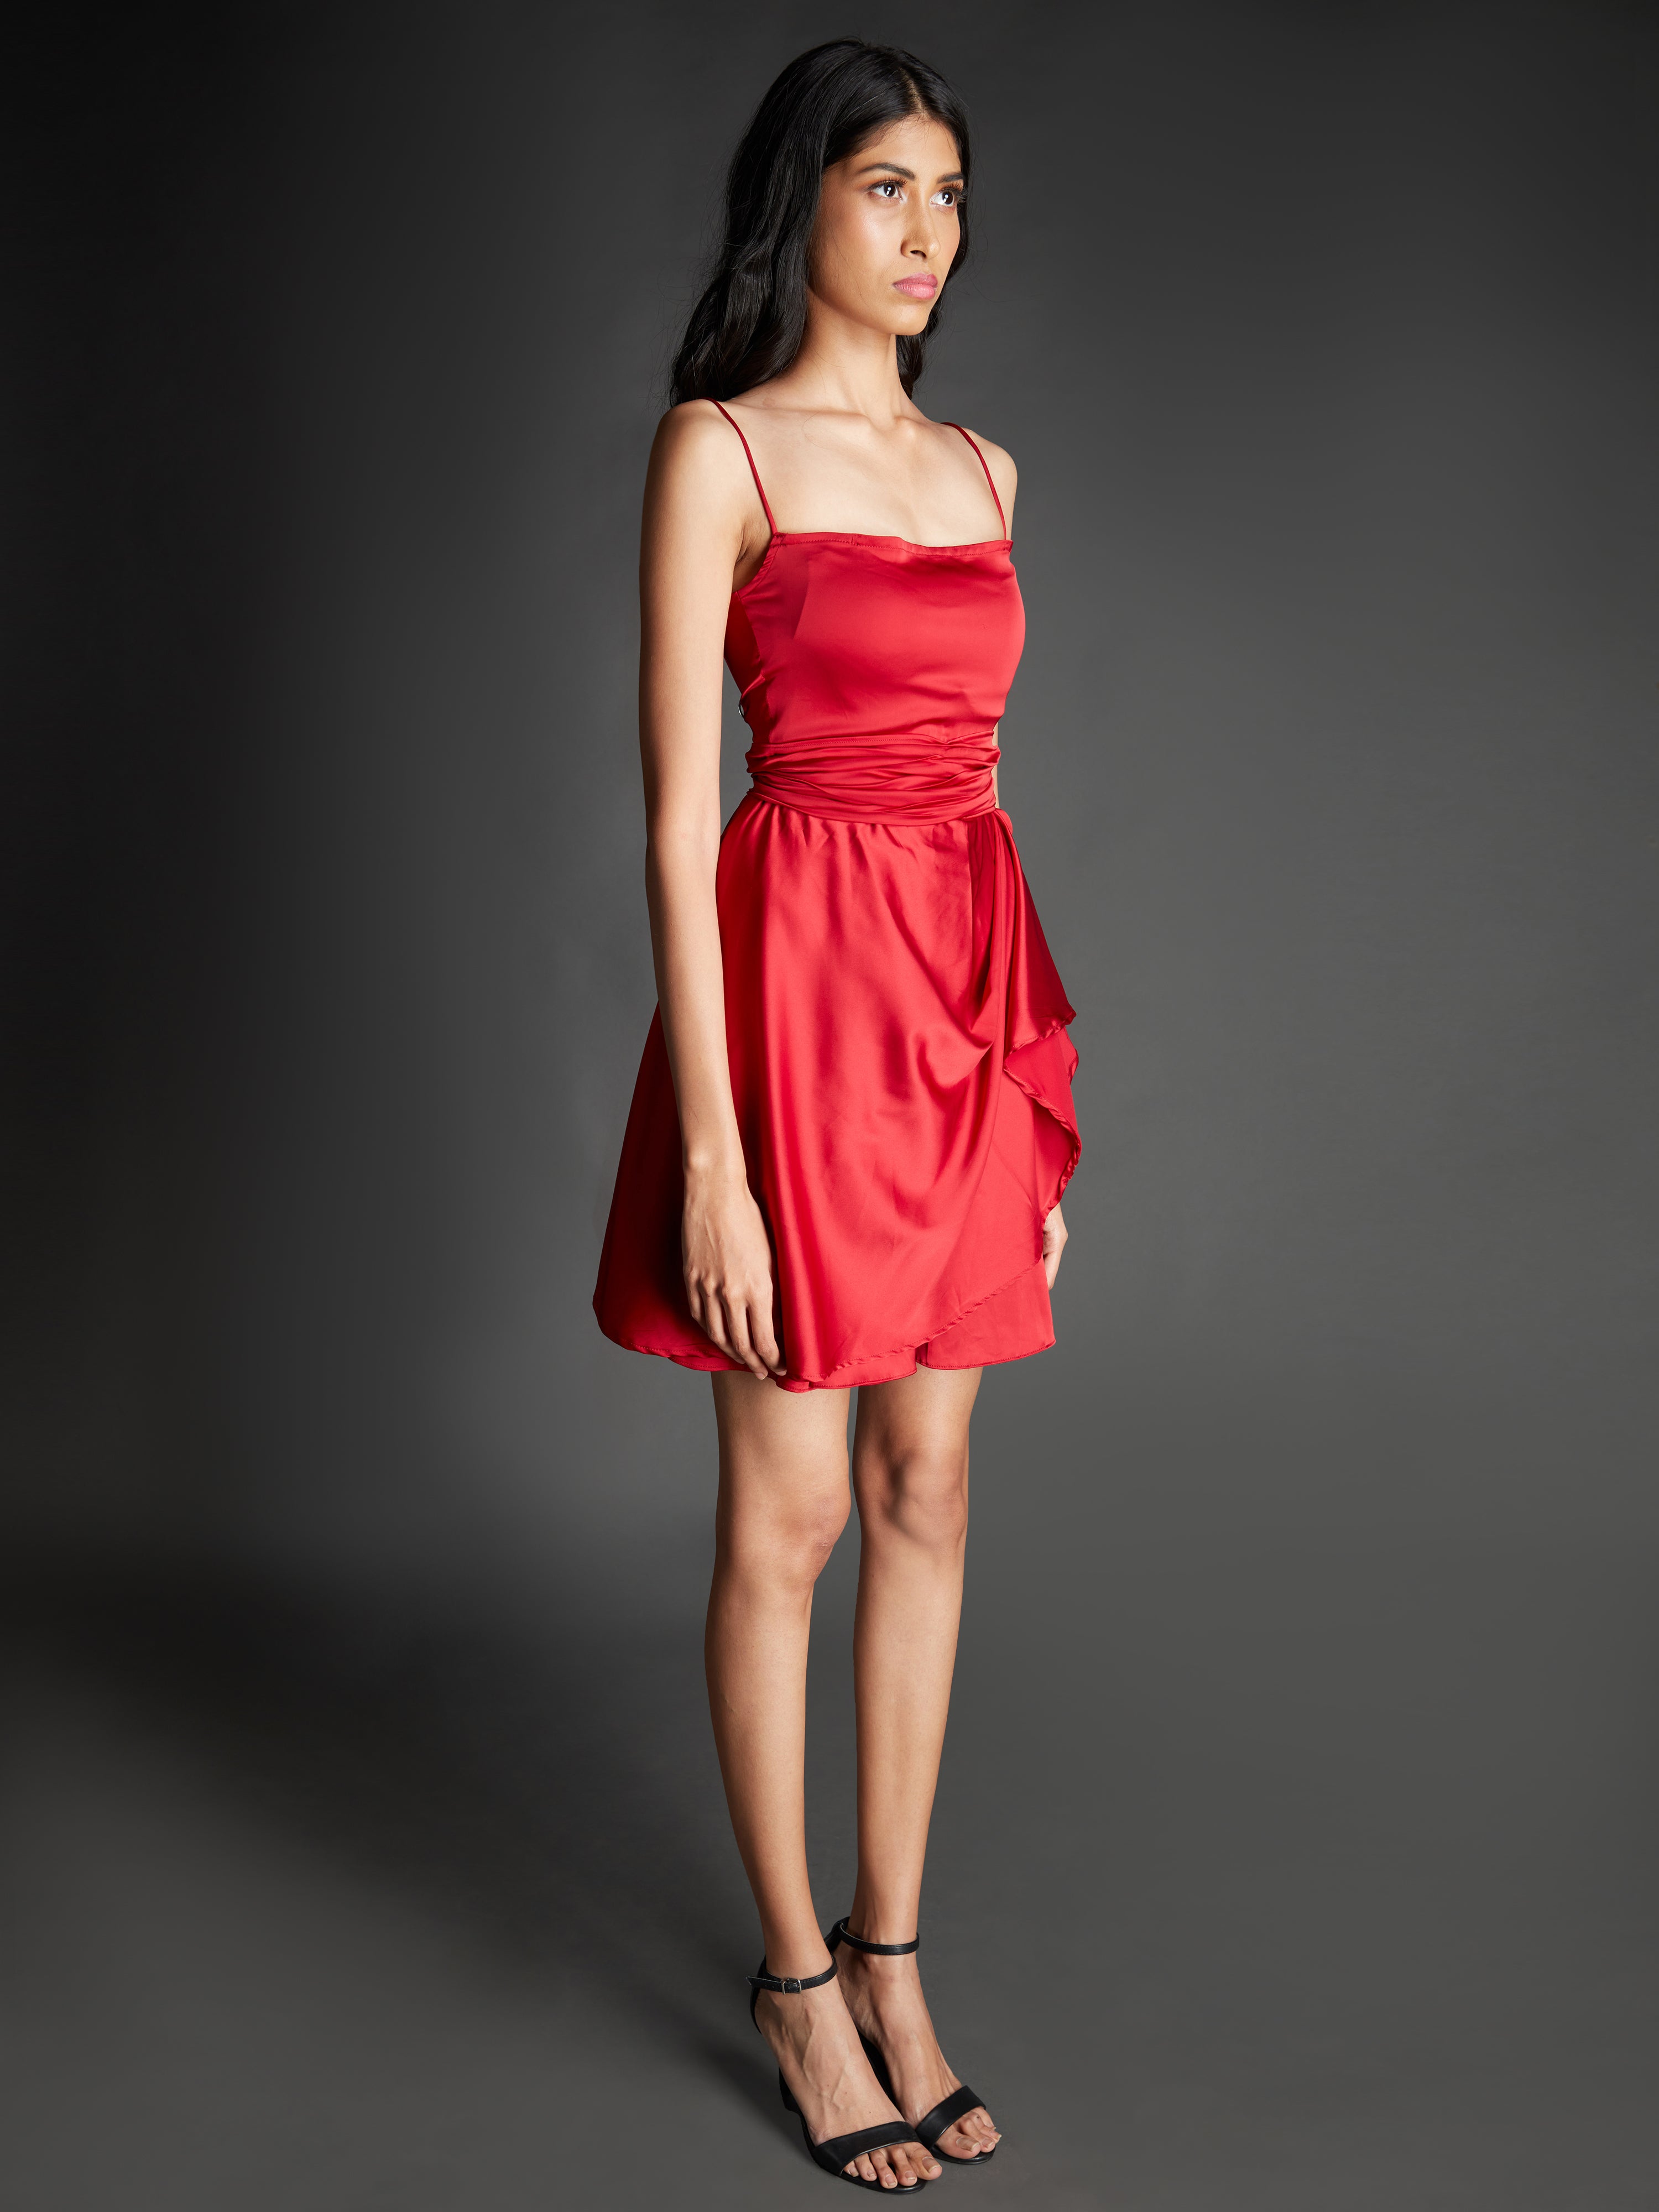 SATIN SINGLET RED DRESS